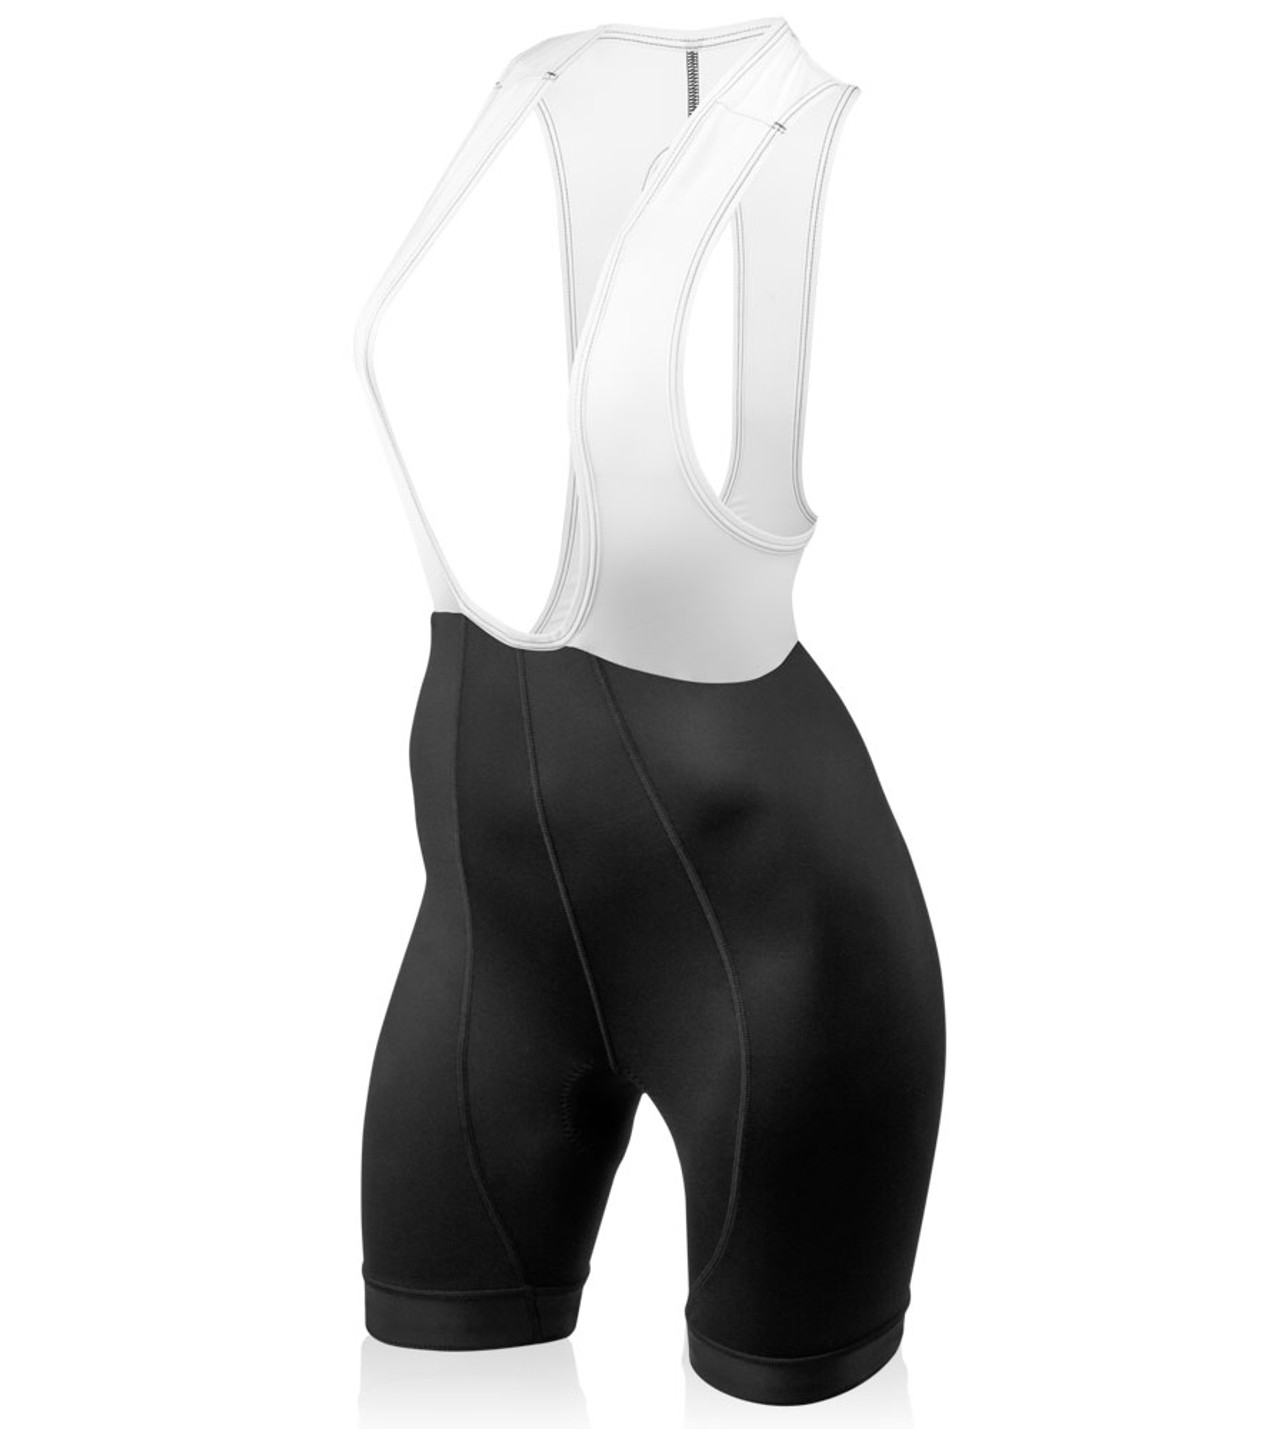 Women's Cycling Underwear - White